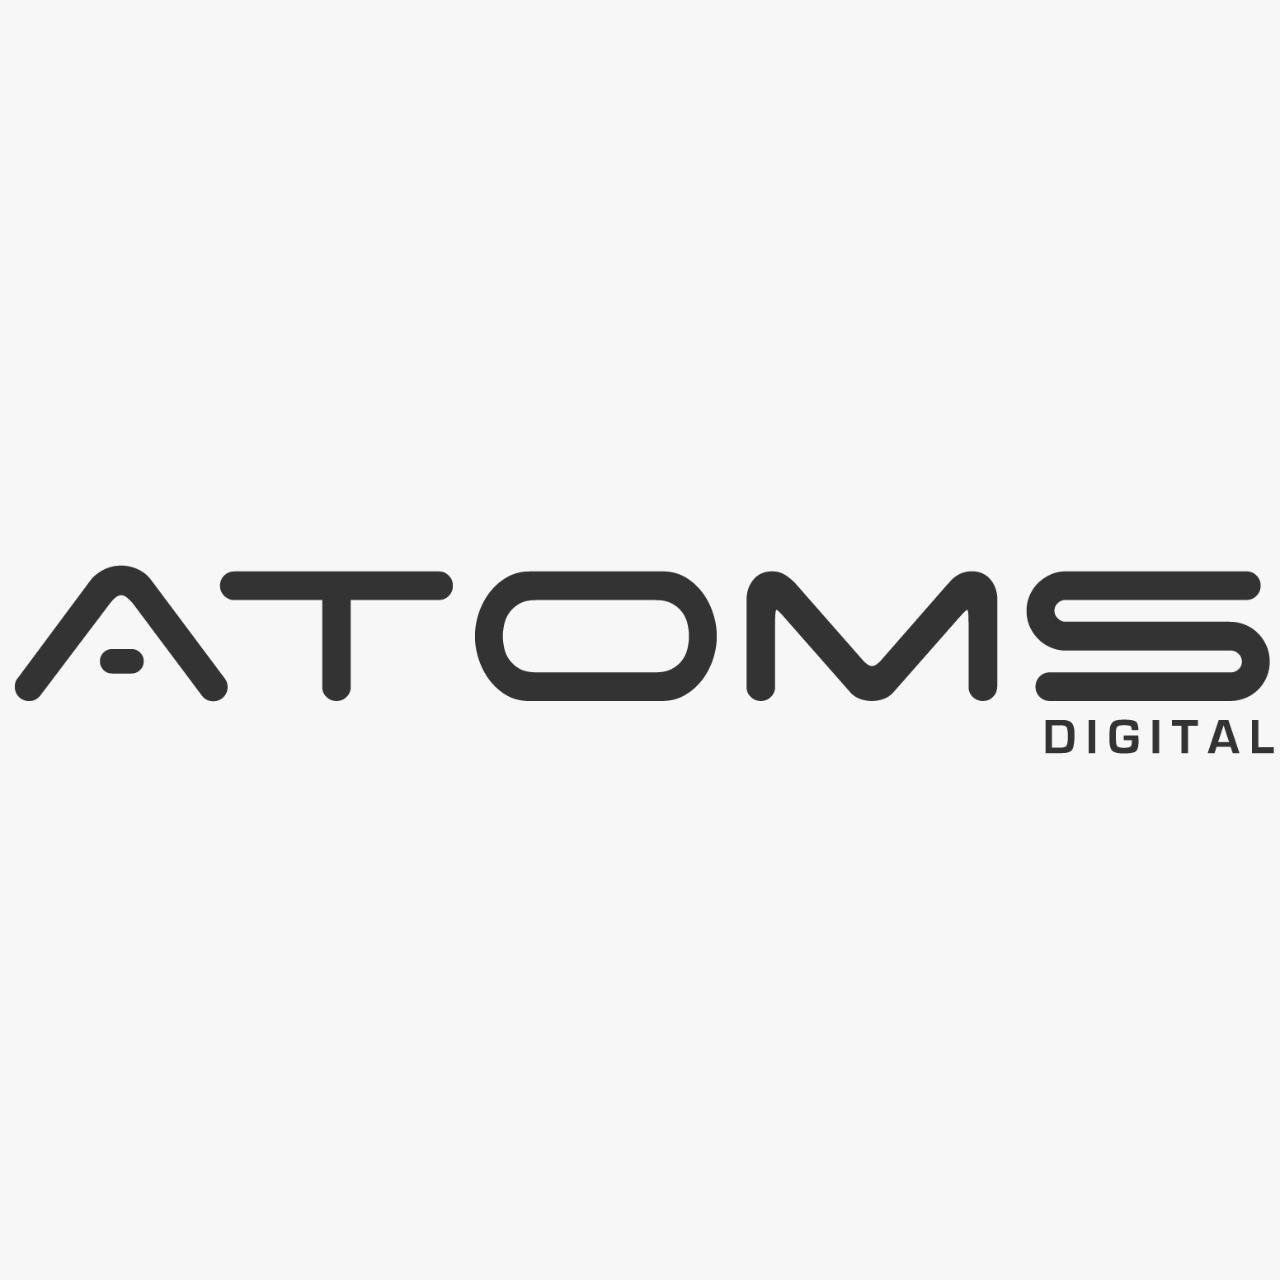 Atoms Digital